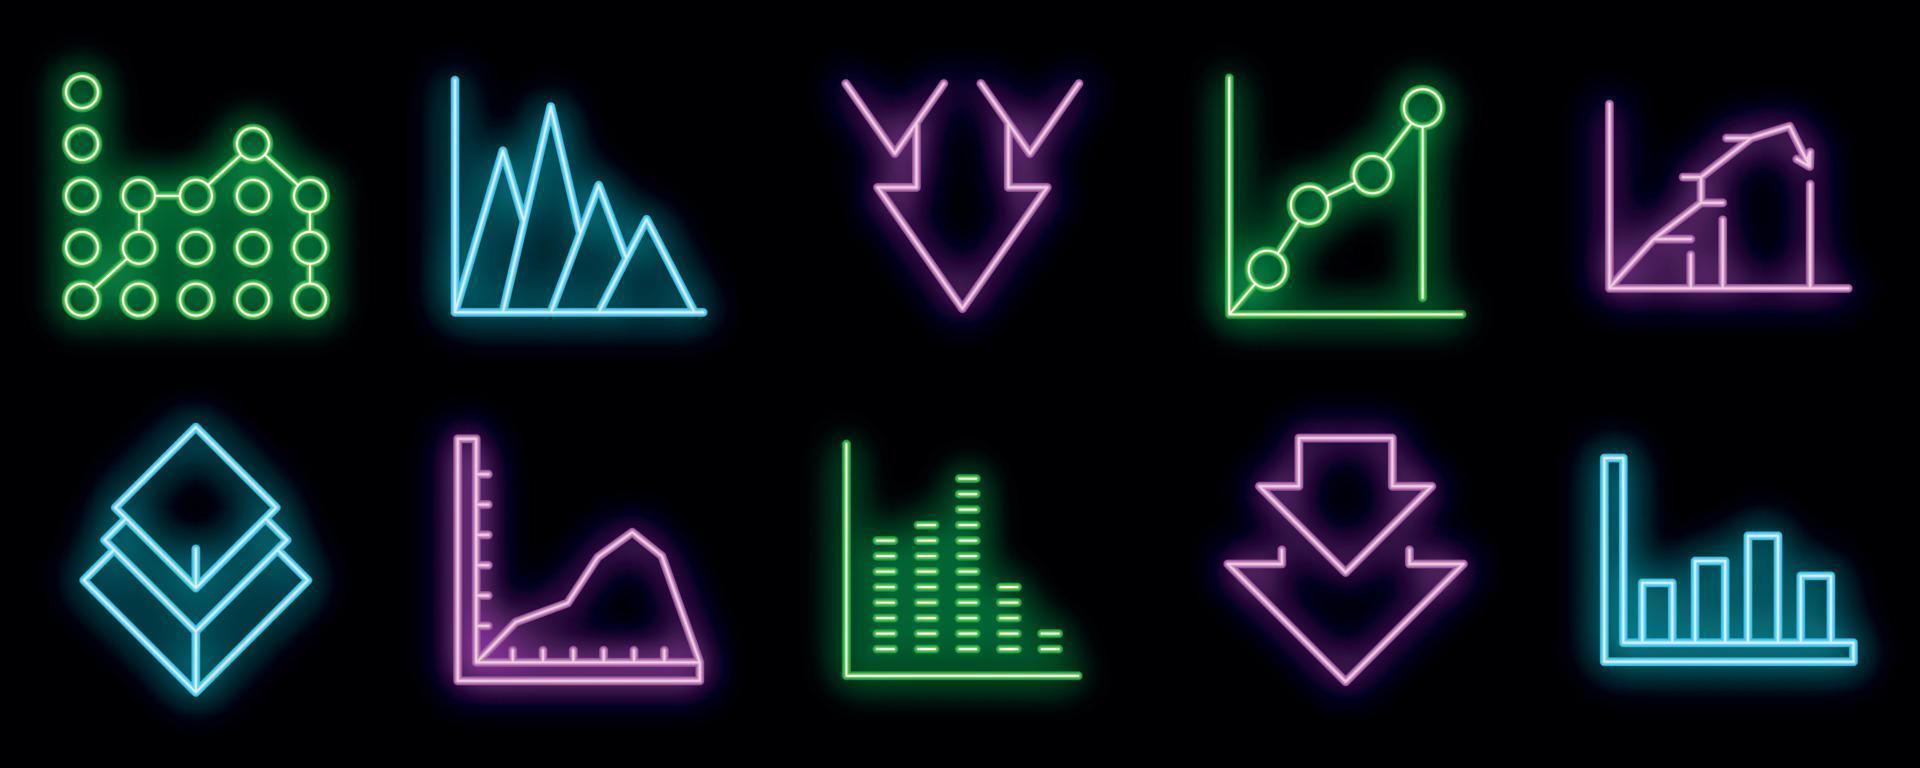 Regression icons set vector neon